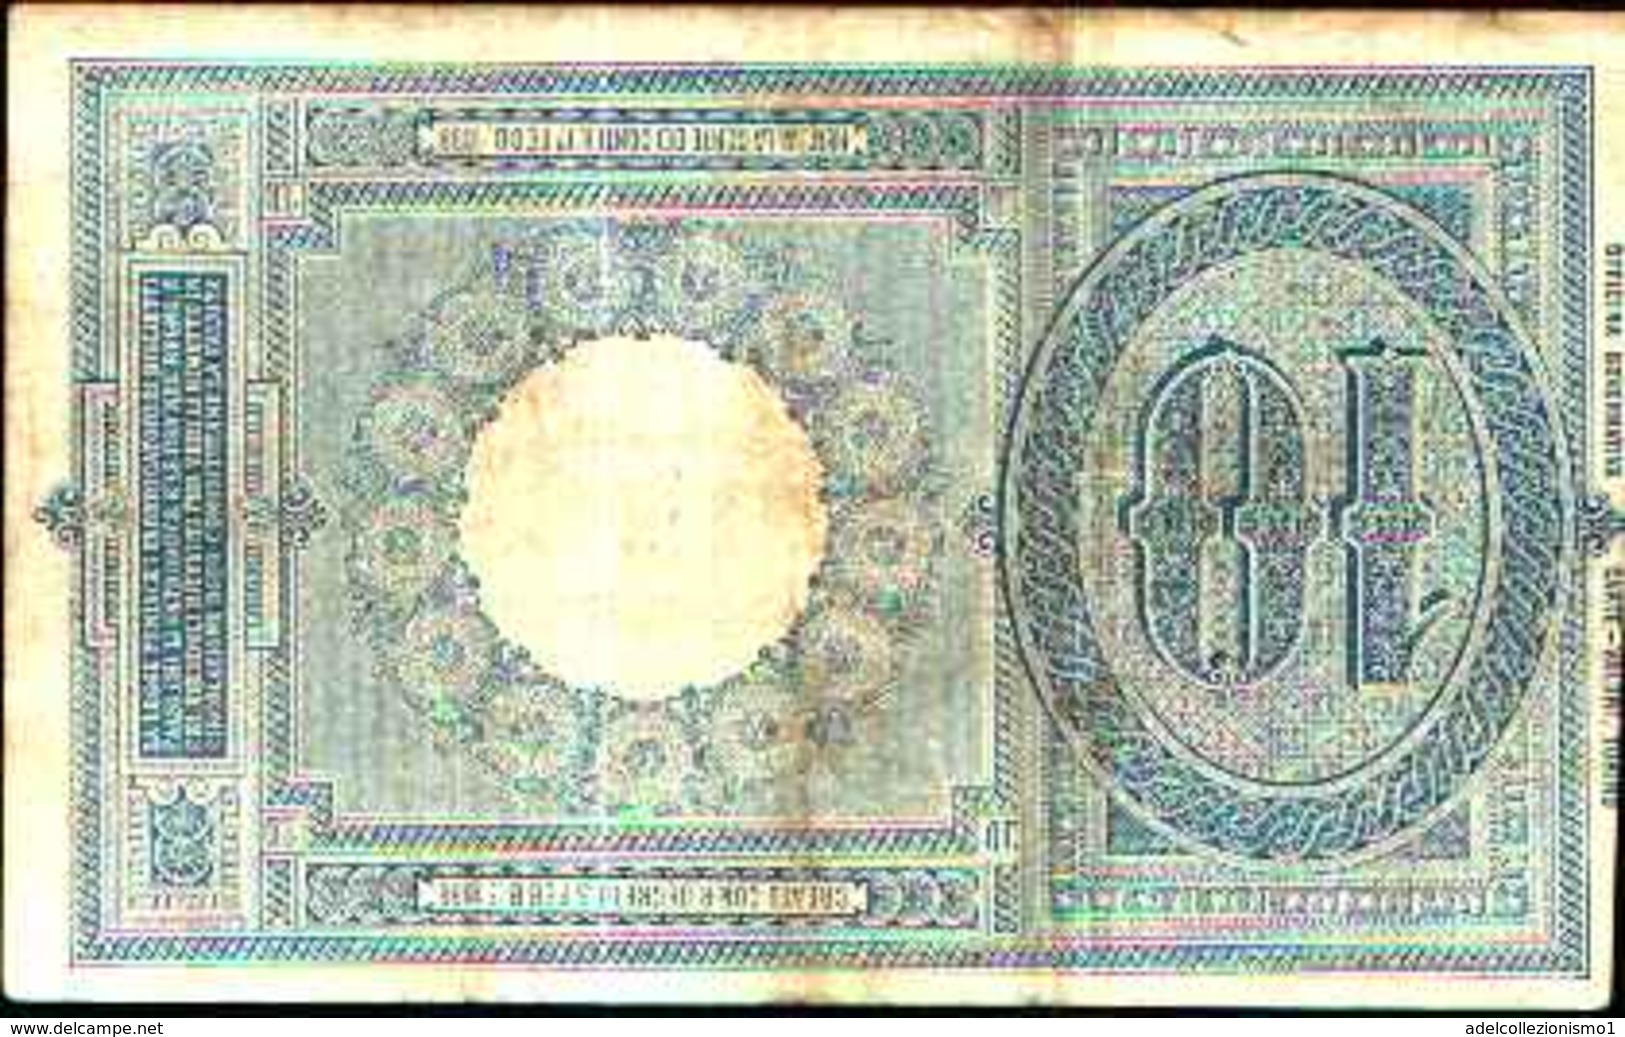 1791) 10 LIRE VITTORIO EMANUELE III (EFFIGE DI UMBERTO I)-DEC. 23-4-1914 -SPL - Italia – 10 Lire